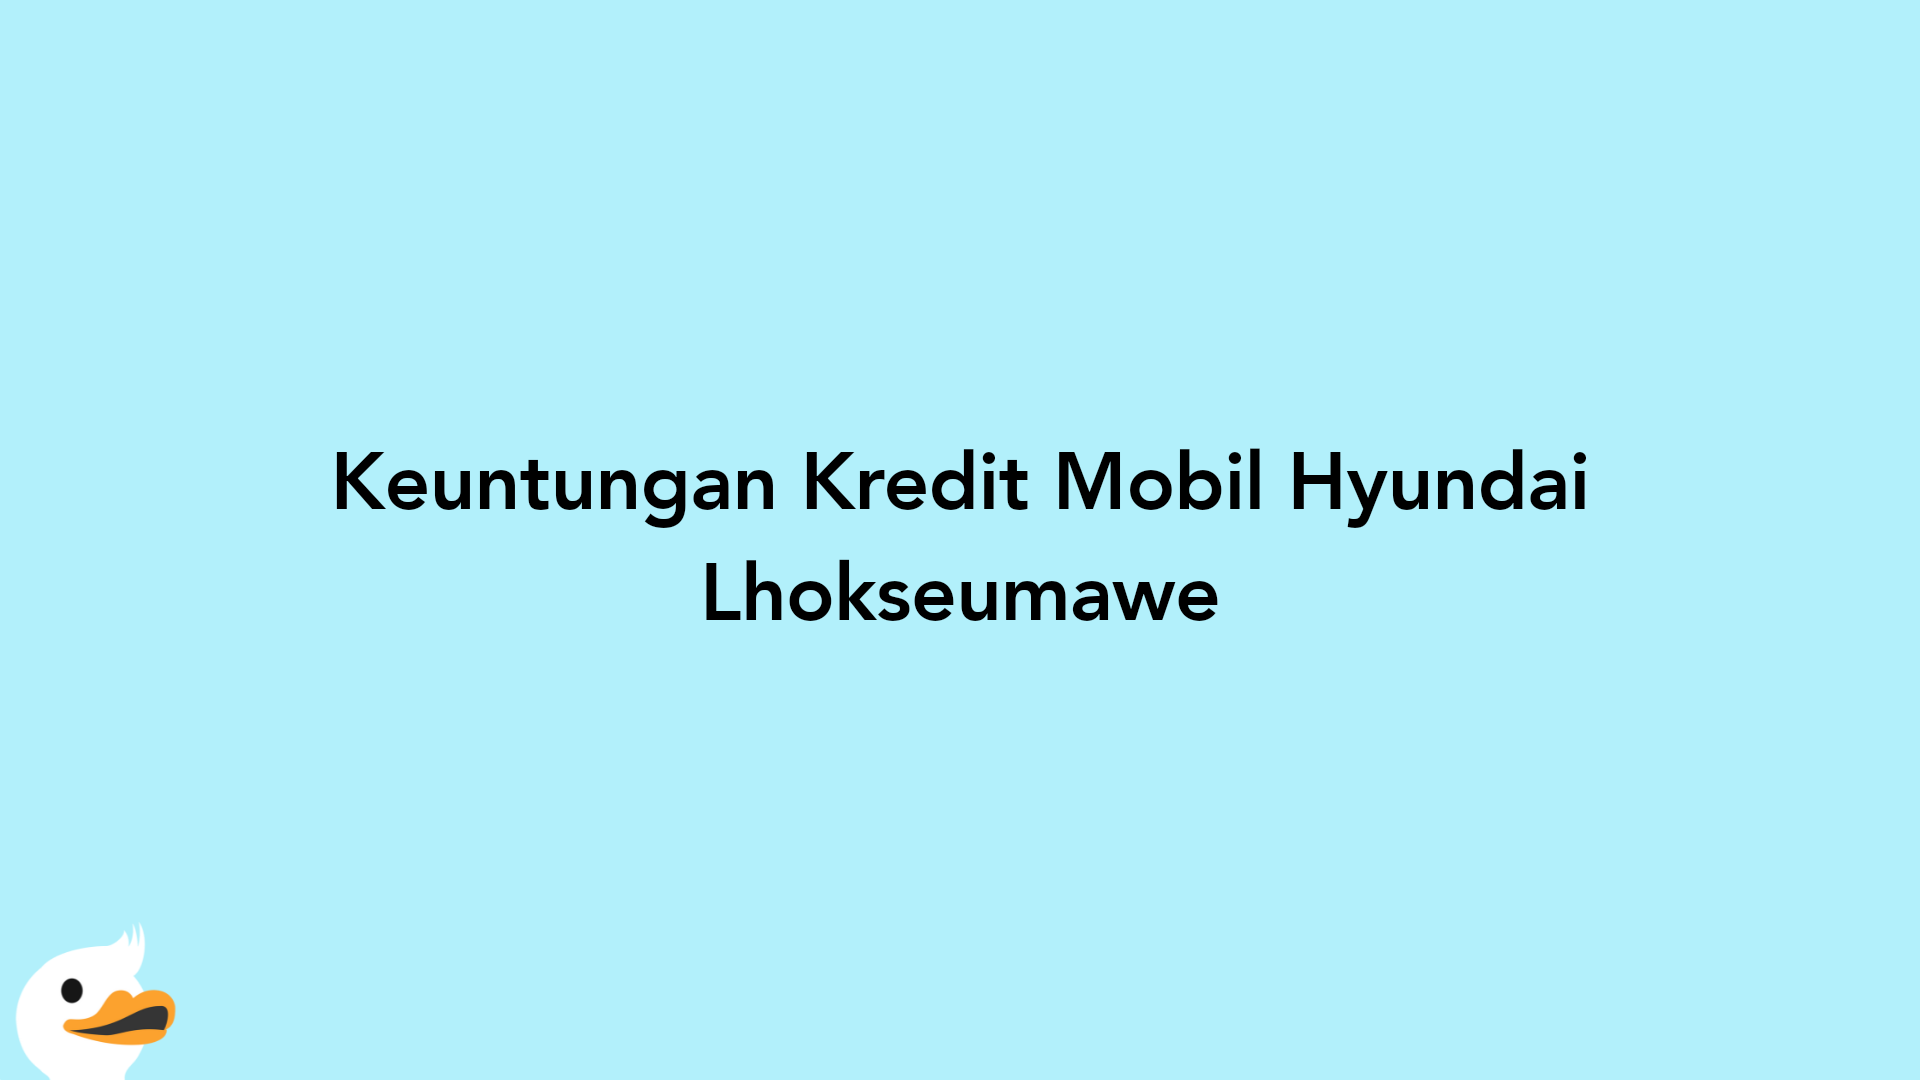 Keuntungan Kredit Mobil Hyundai Lhokseumawe